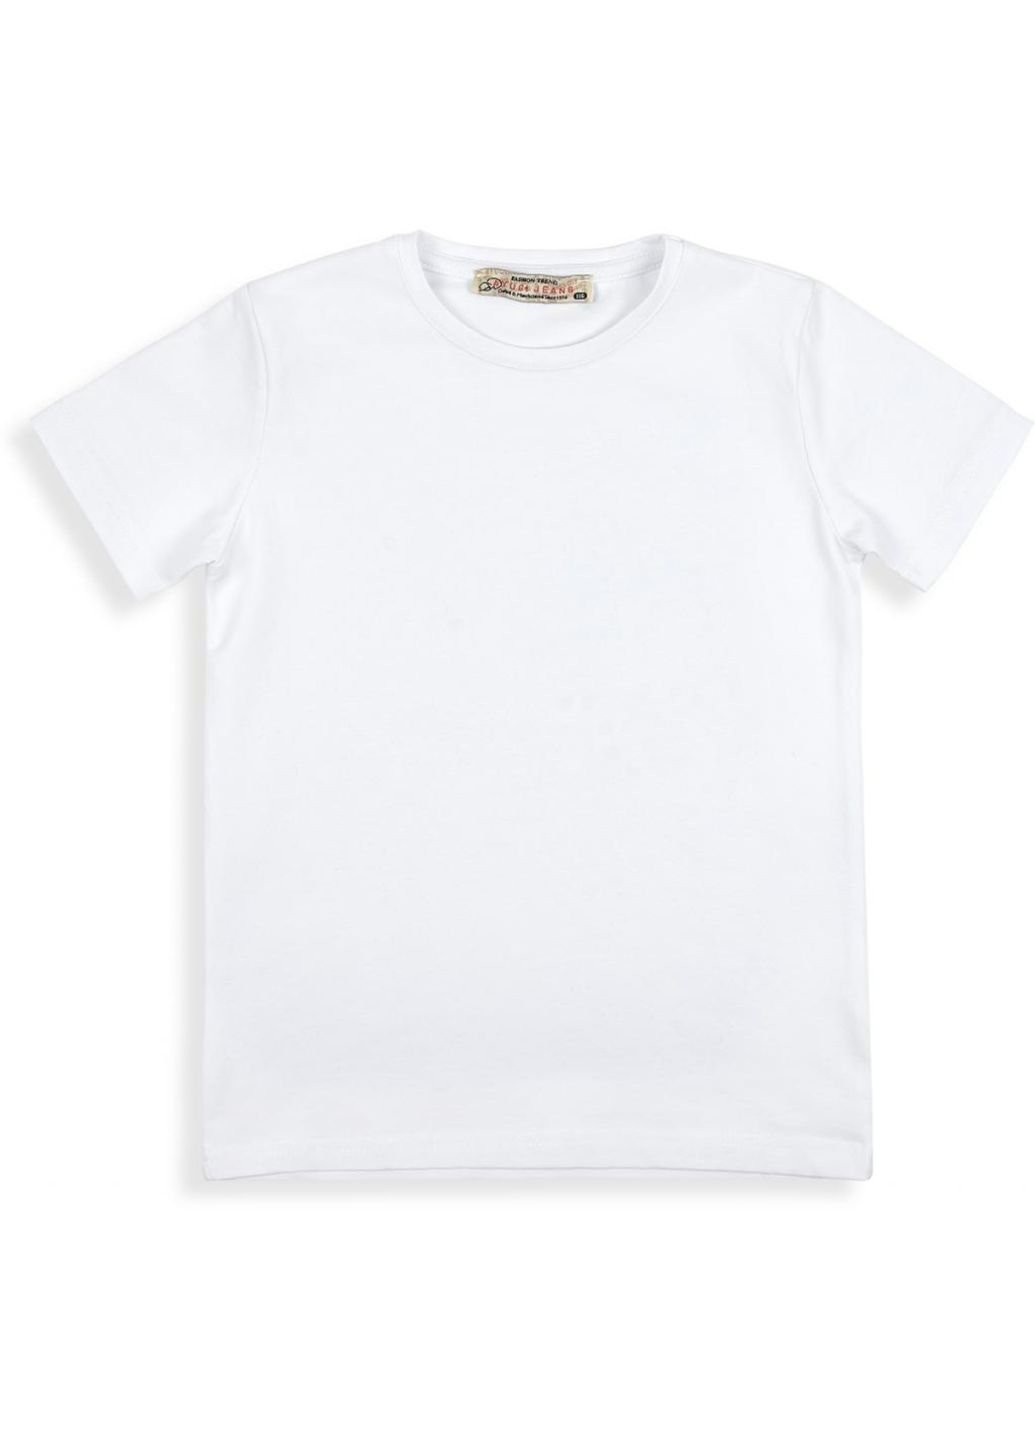 Белая демисезонная футболка детская без рисунка (6023-134b-white) A-yugi